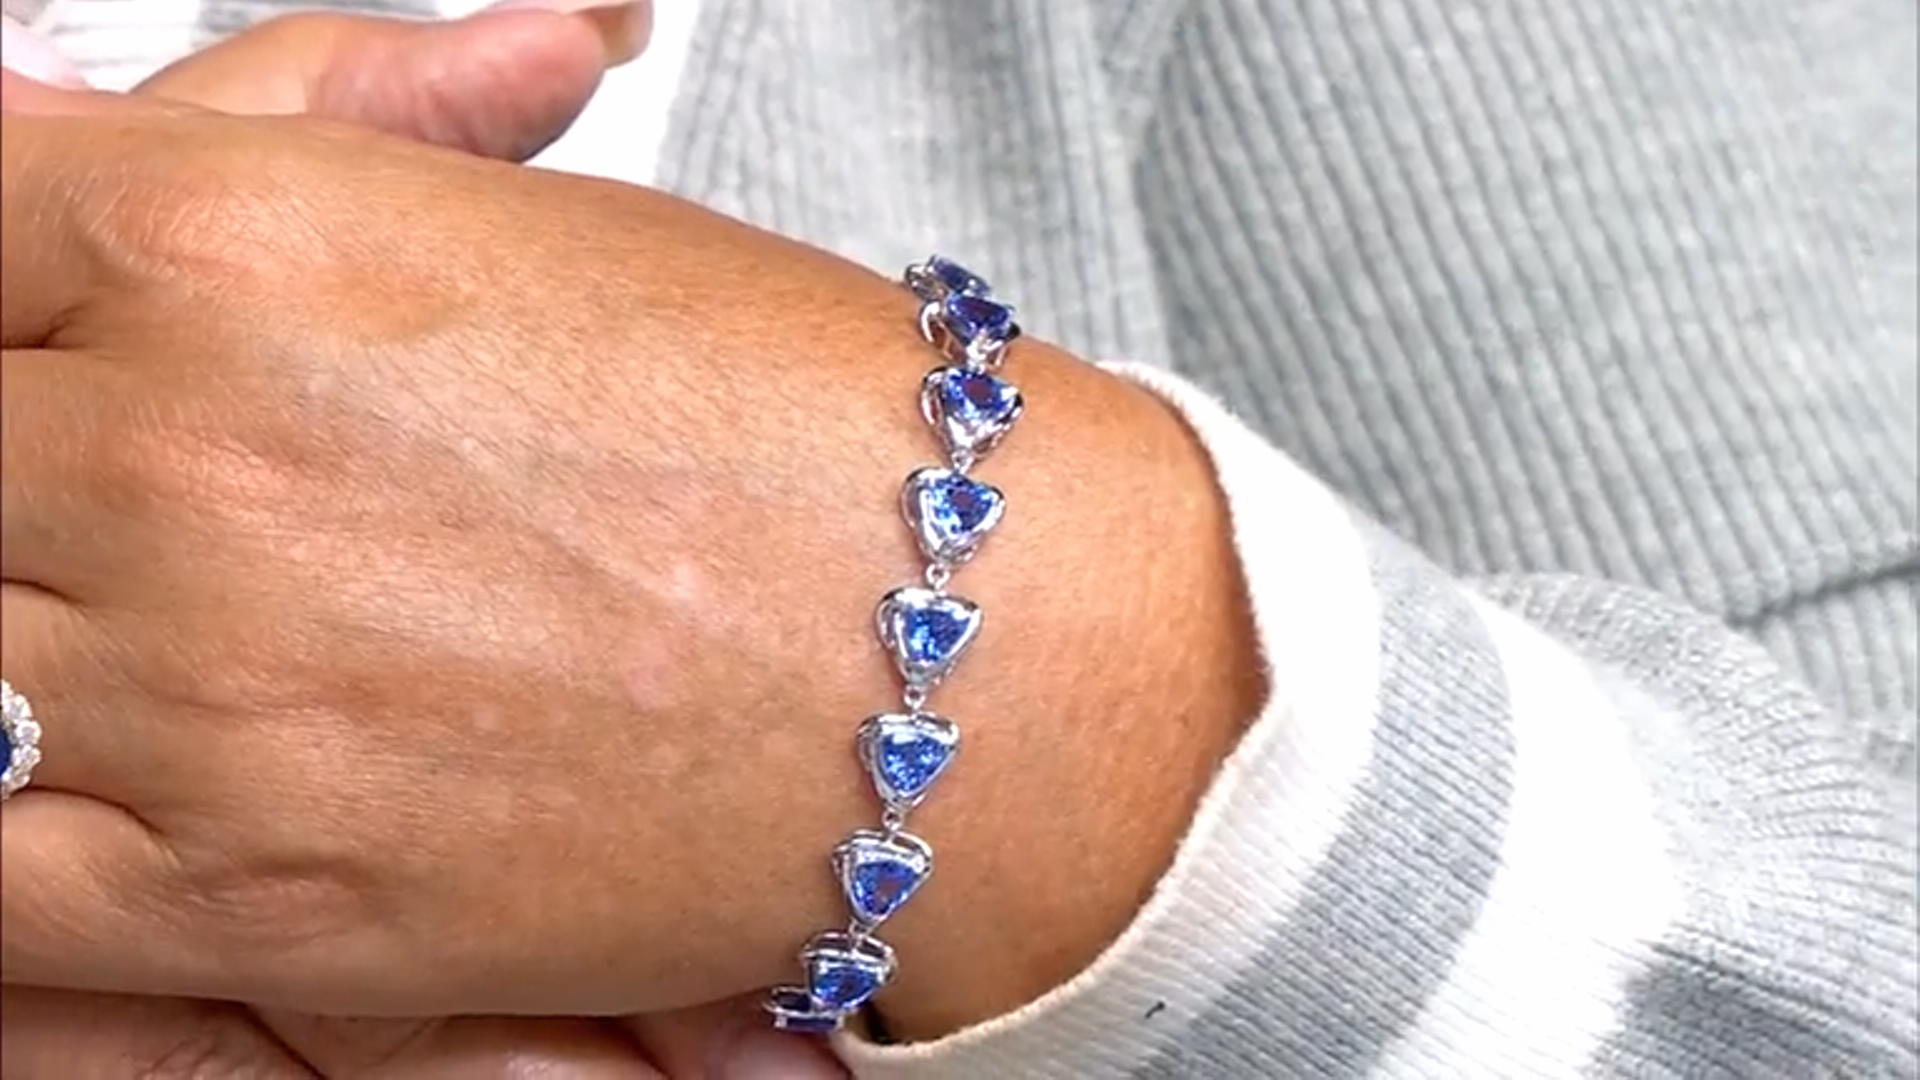 Blue Tanzanite Rhodium Over 14k White Gold Bracelet
9.95ctw Video Thumbnail